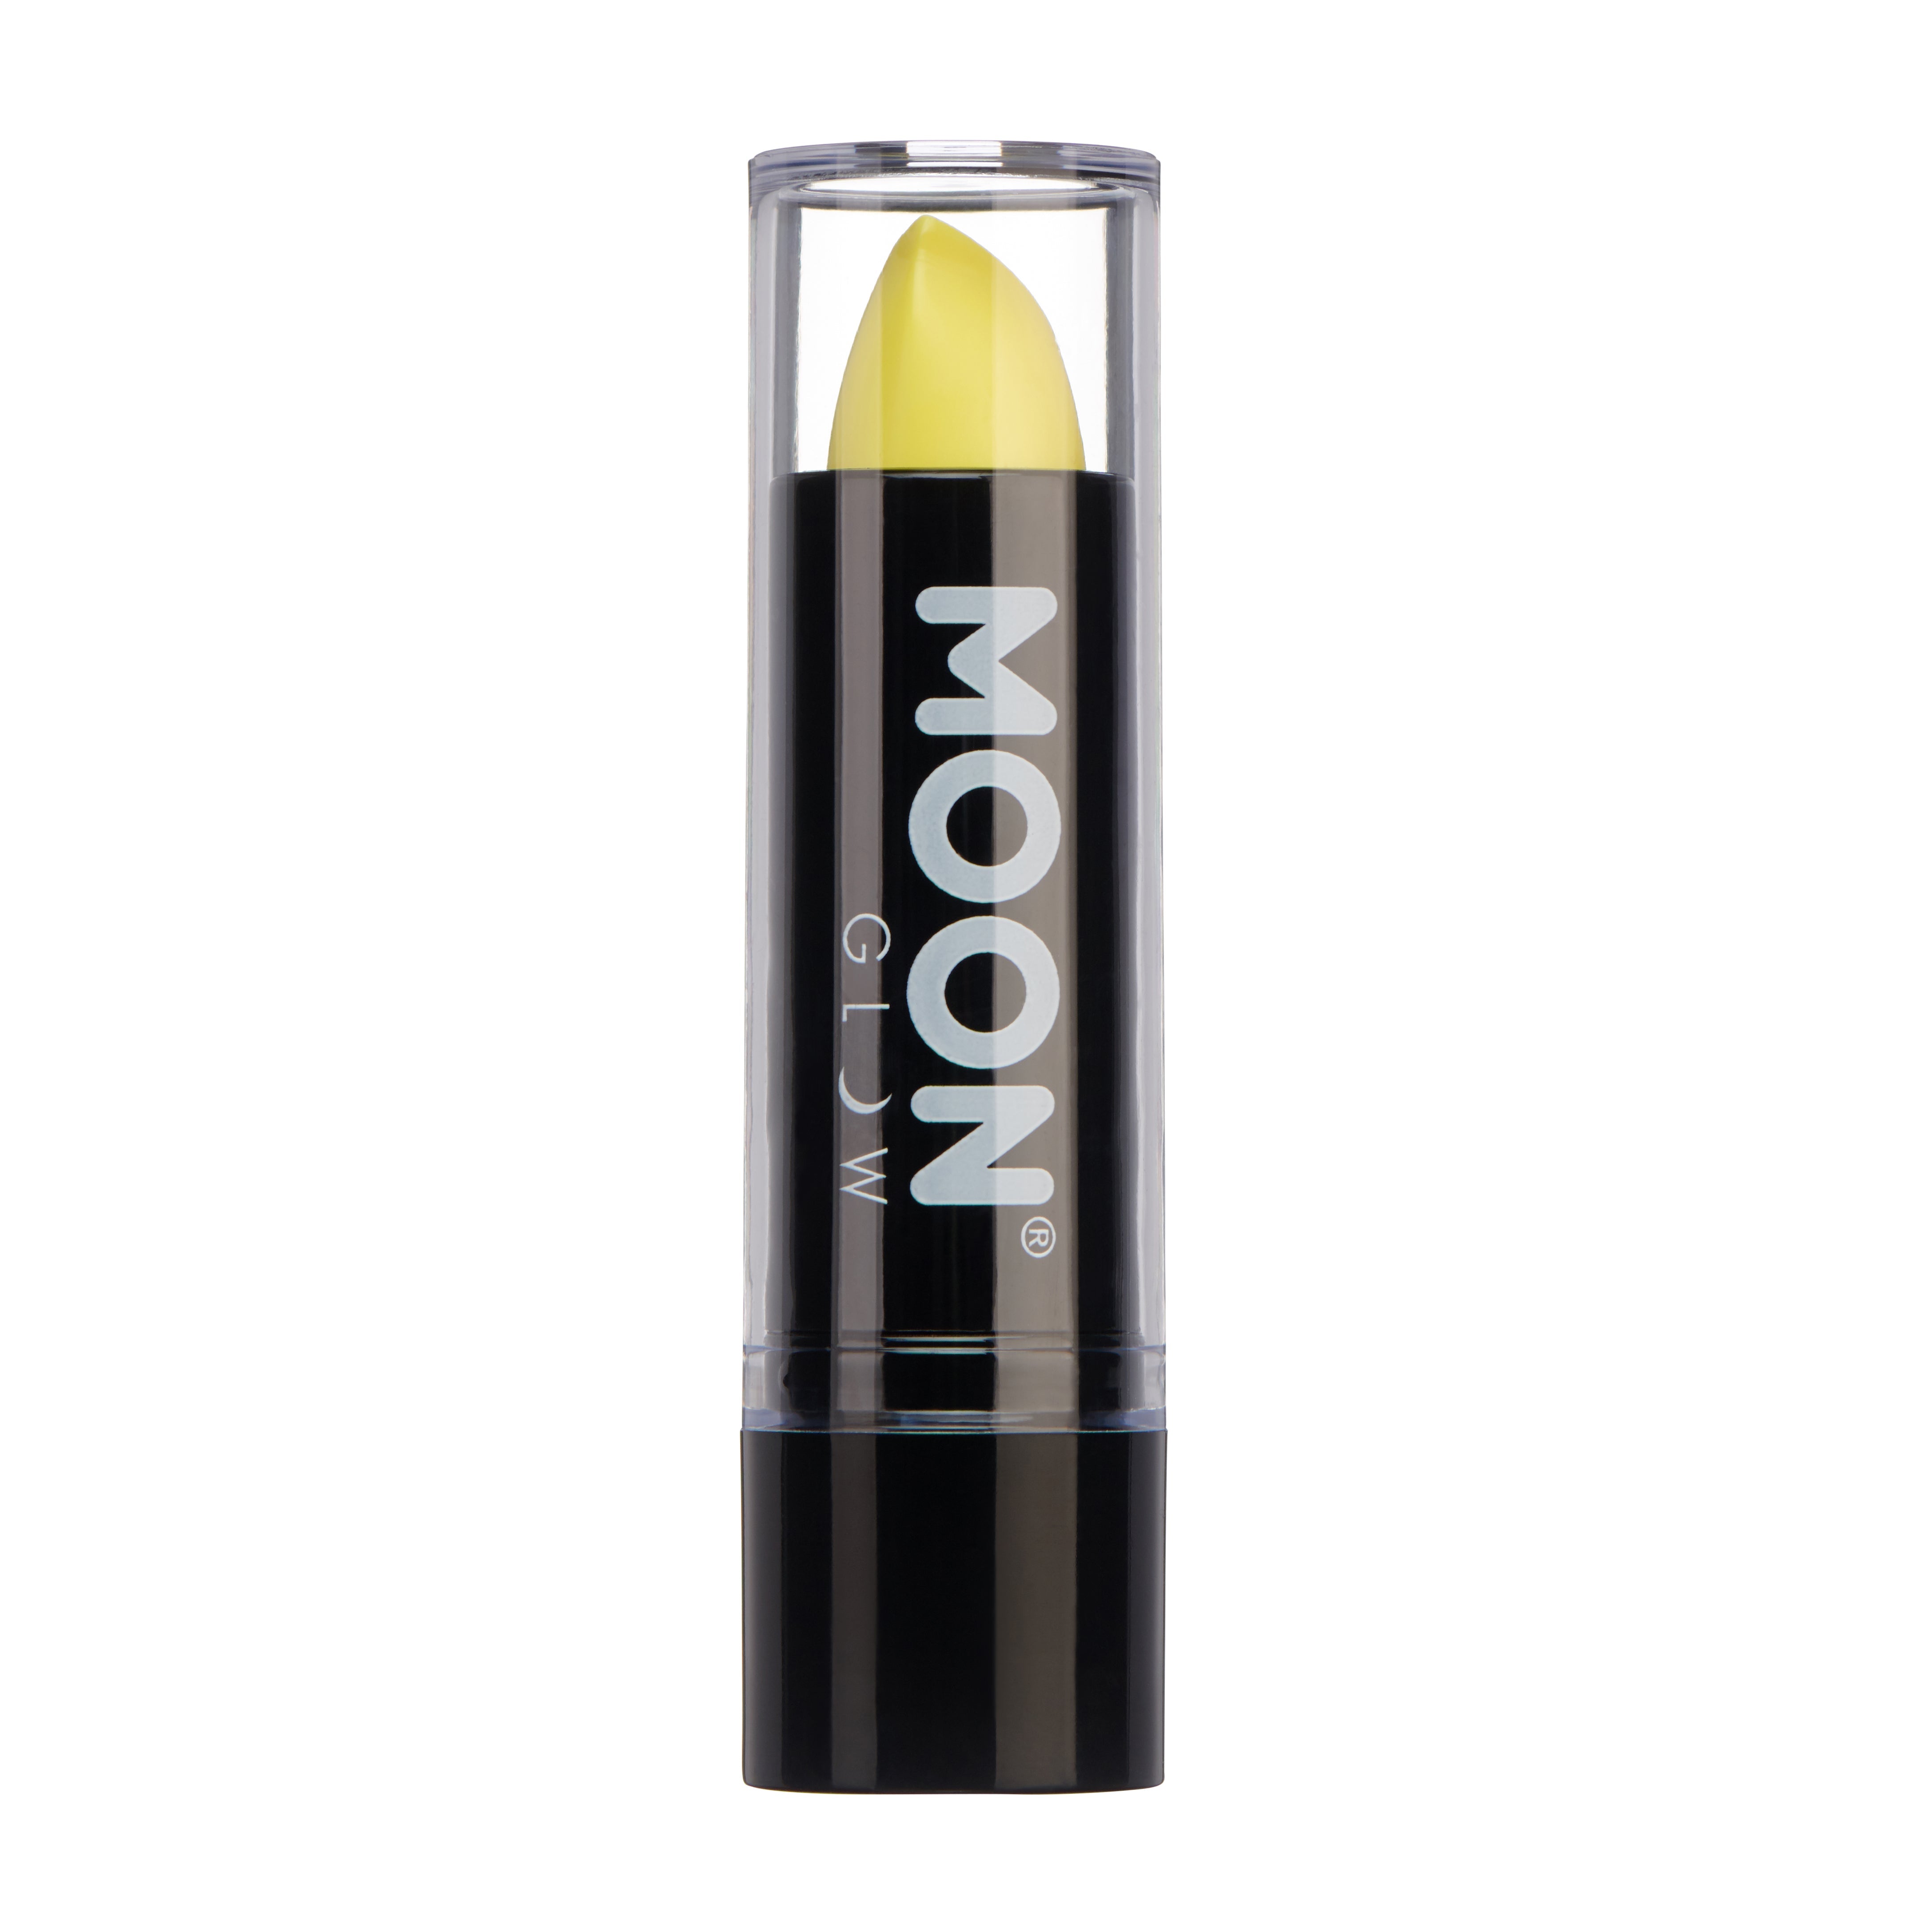 Pastel Yellow - Neon UV Glow Blacklight Lipstick, 5g. Cosmetically certified, FDA & Health Canada compliant and cruelty free.